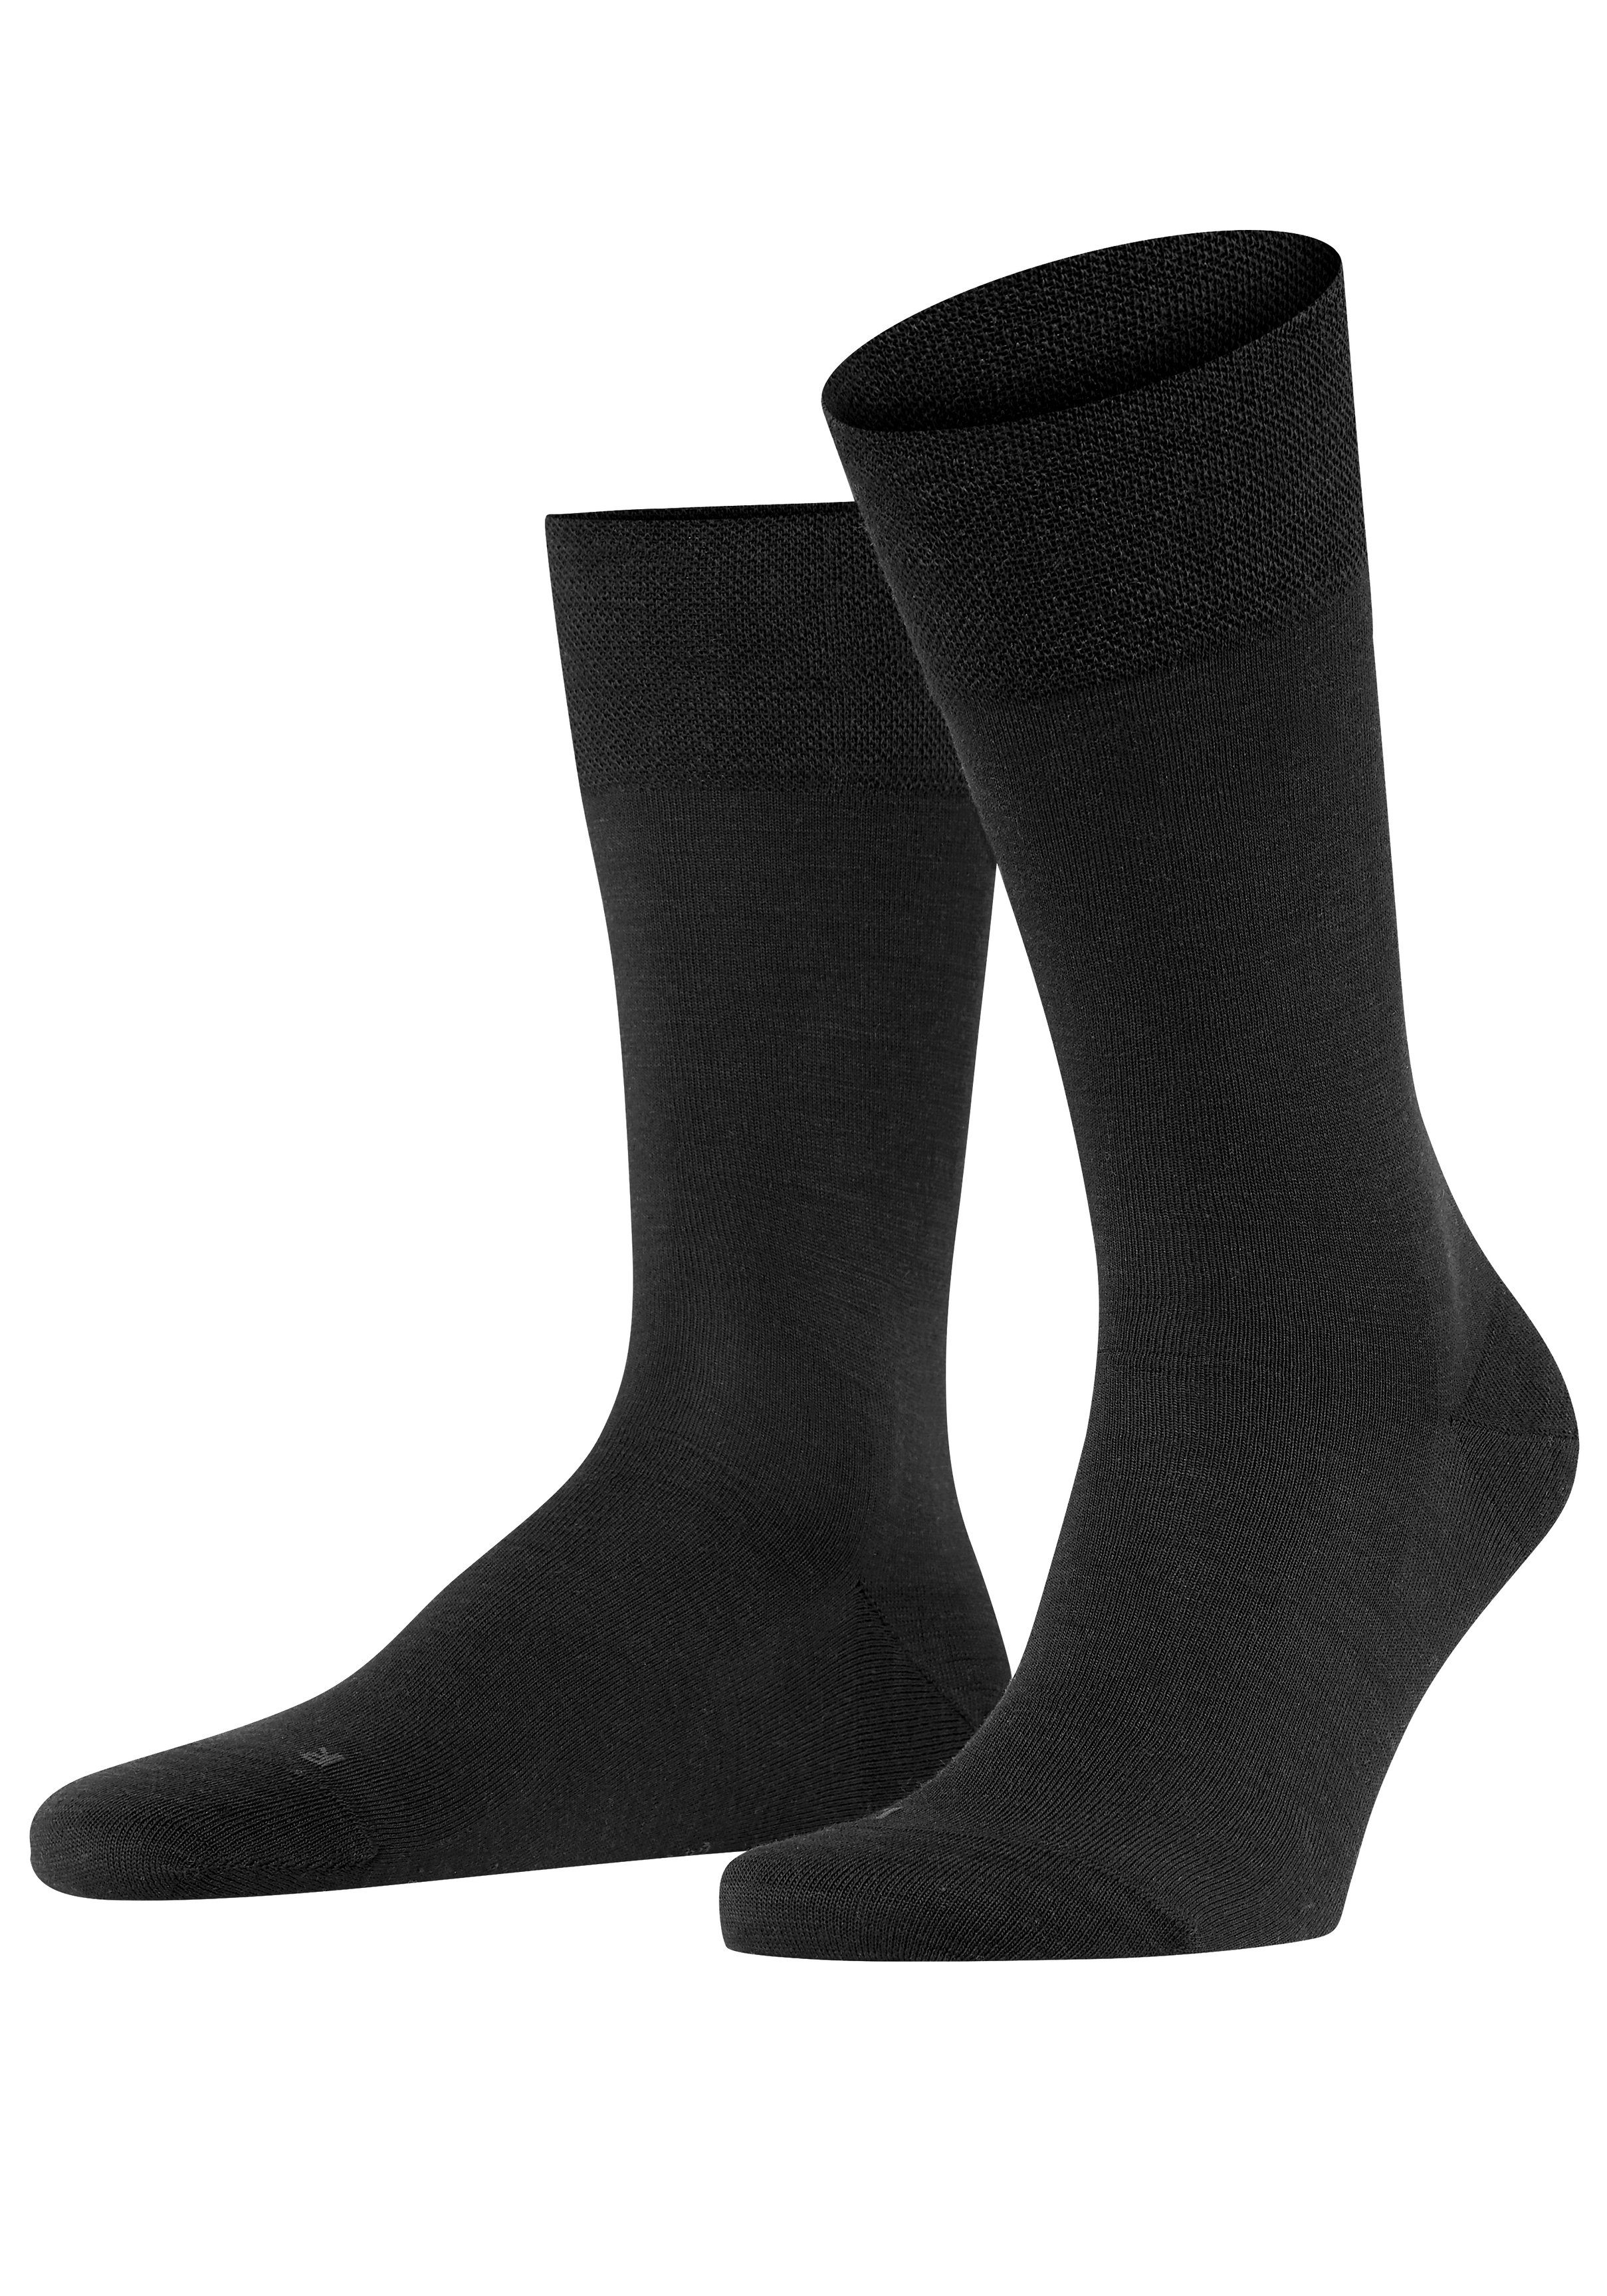 Socken schwarz Bündchen 2-Paar) sensitve FALKE ohne Berlin Gummi Sensitive (Packung, mit